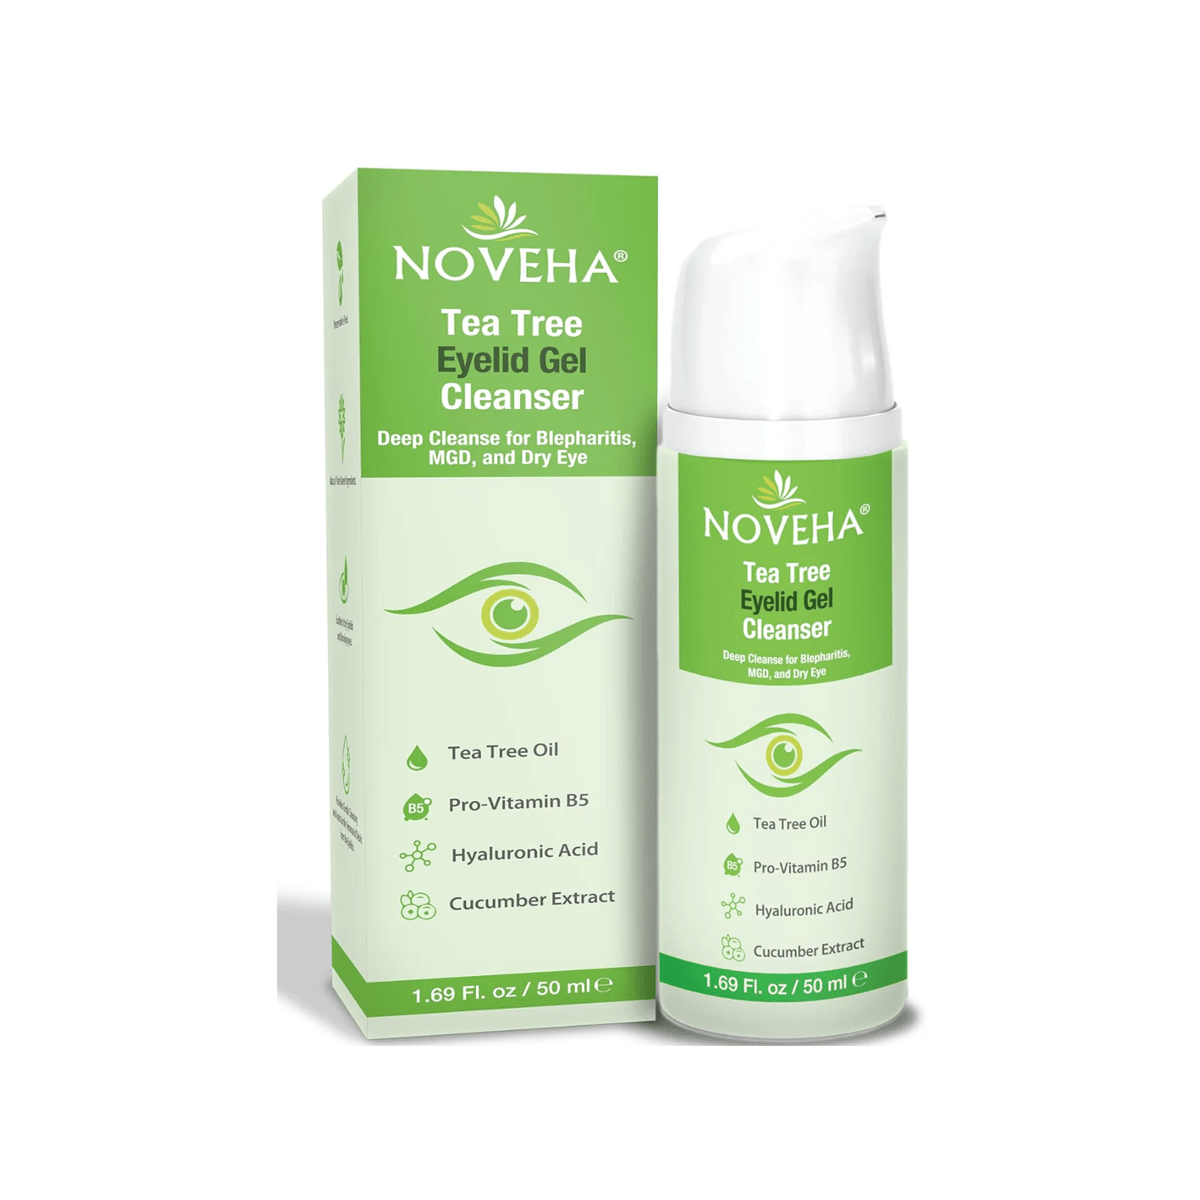 Noveha Tea Tree Eyelid Gel Cleanser for Blepharitis, MGD and Dry Eyes (50mL) - Dryeye Rescue